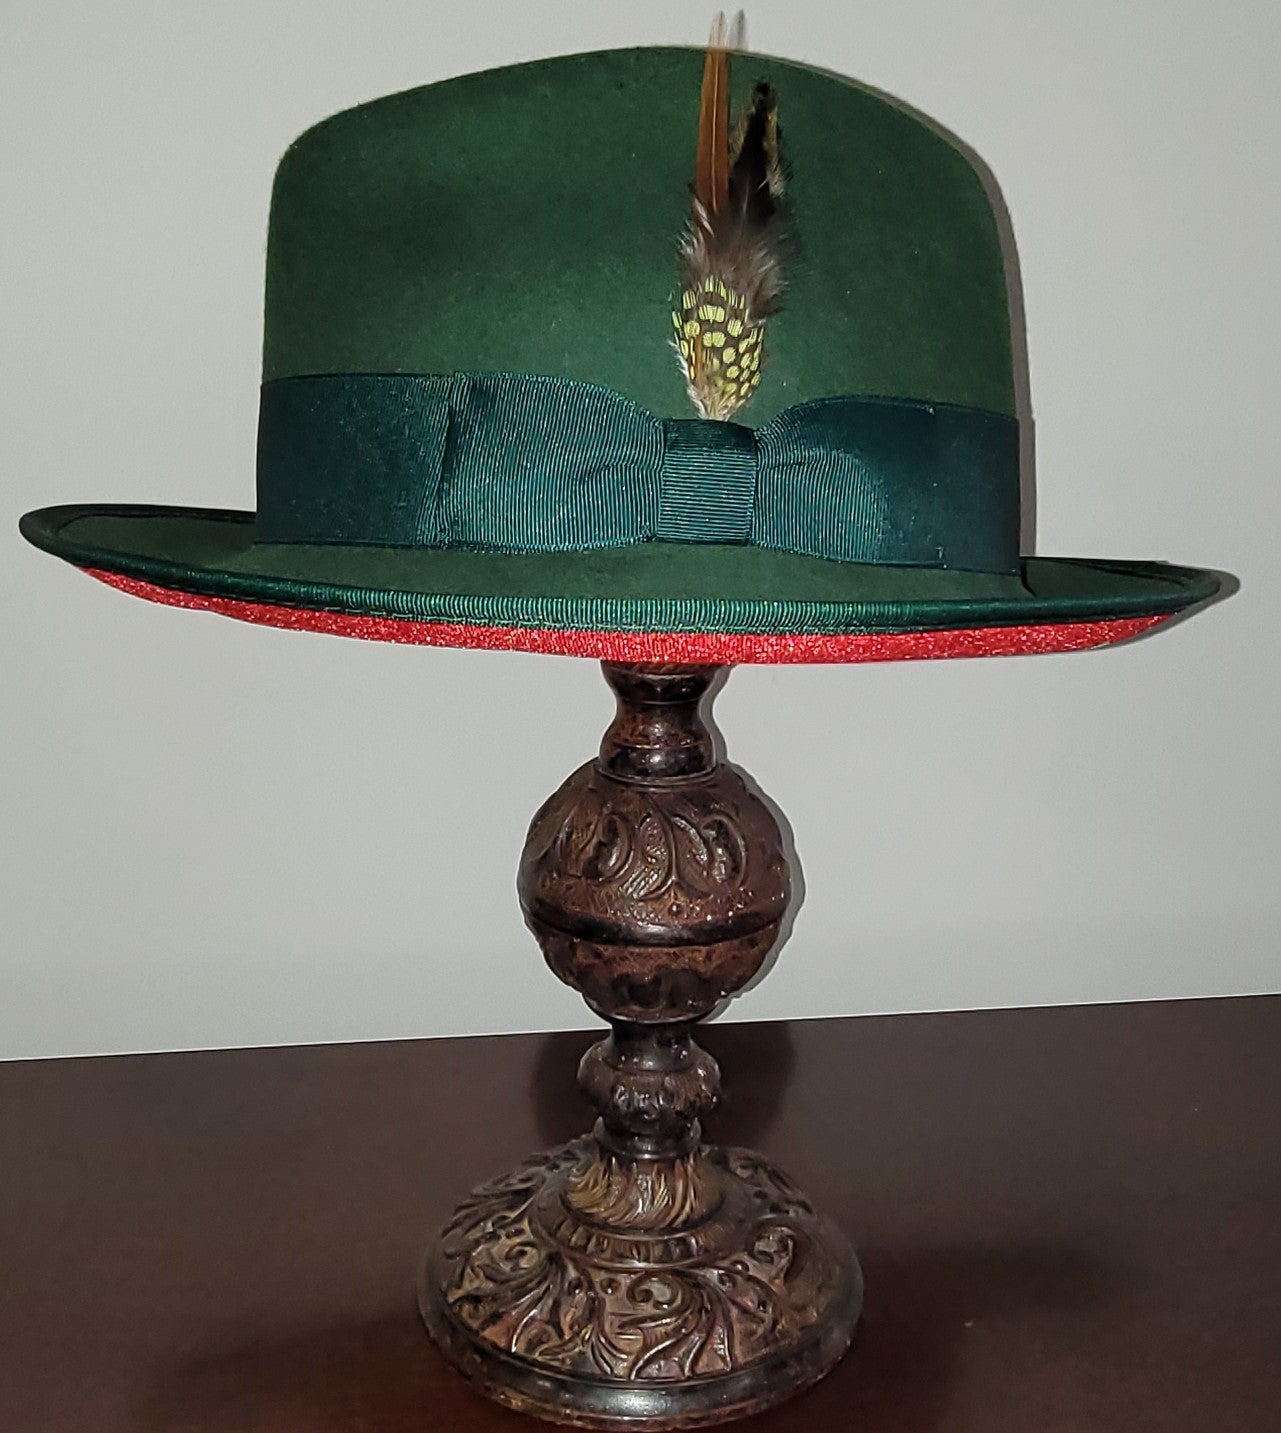 Fedora Roll Up Brim Princeton Hat Collection